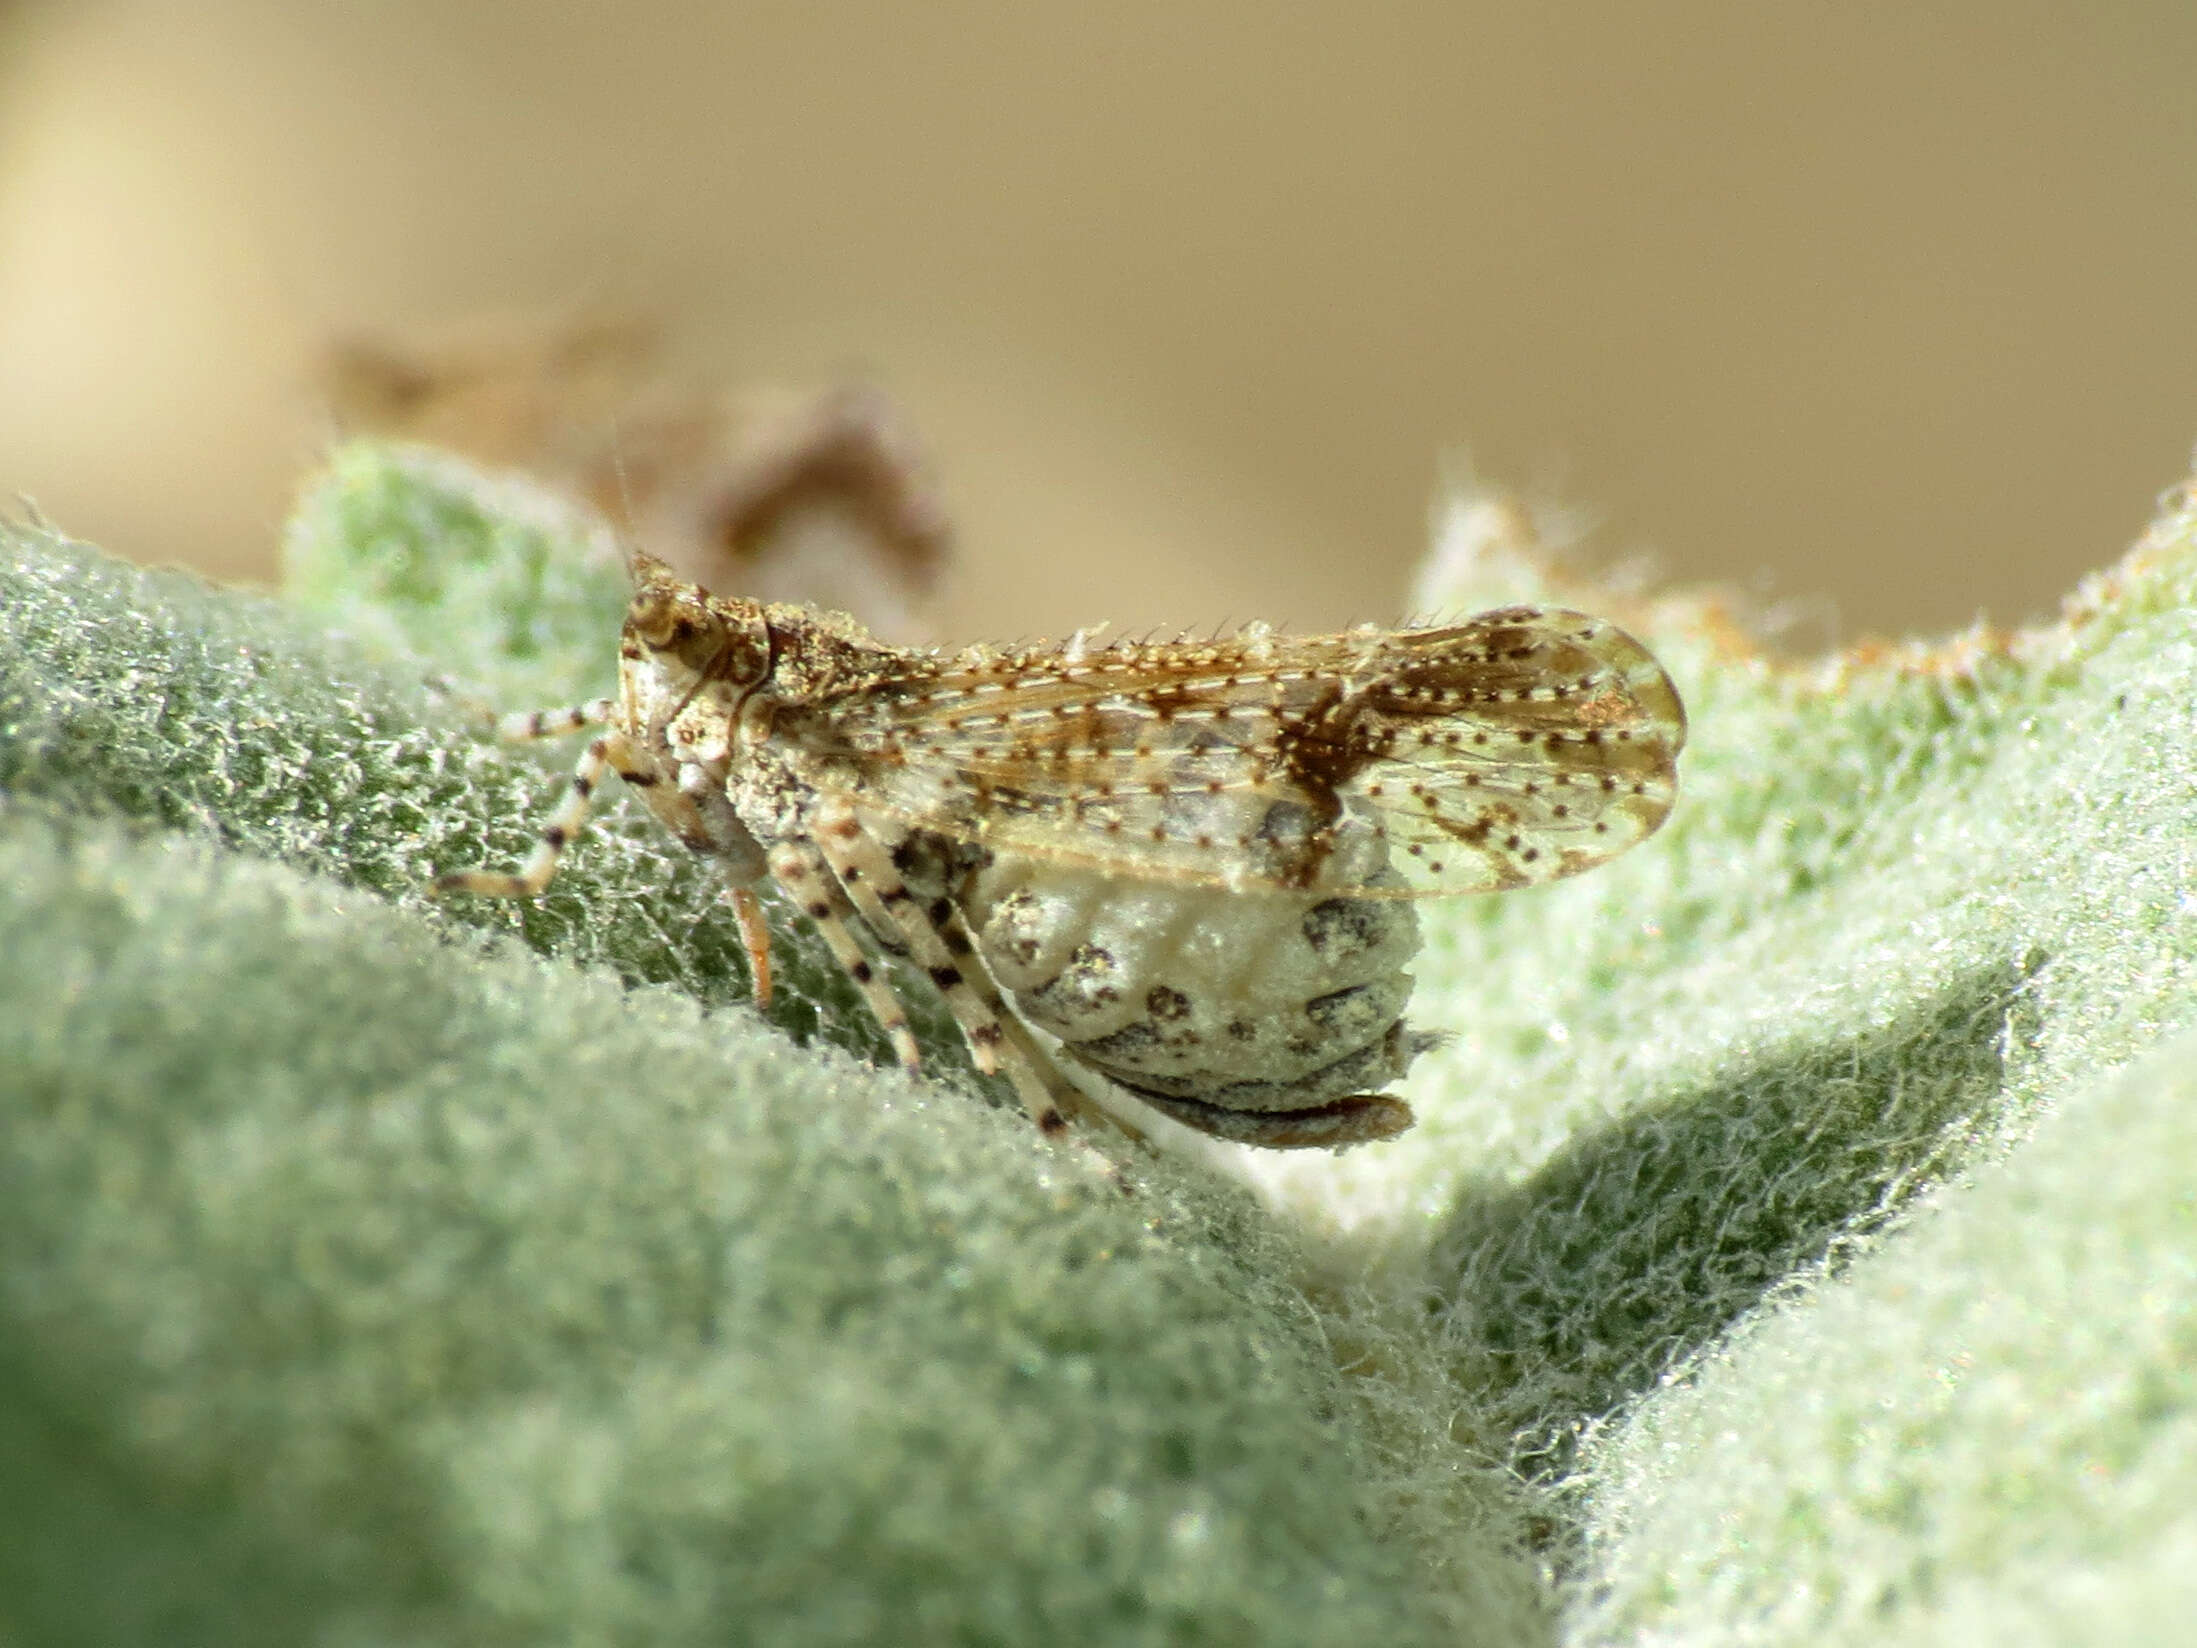 Image of Ambrosia-leaf Bursage